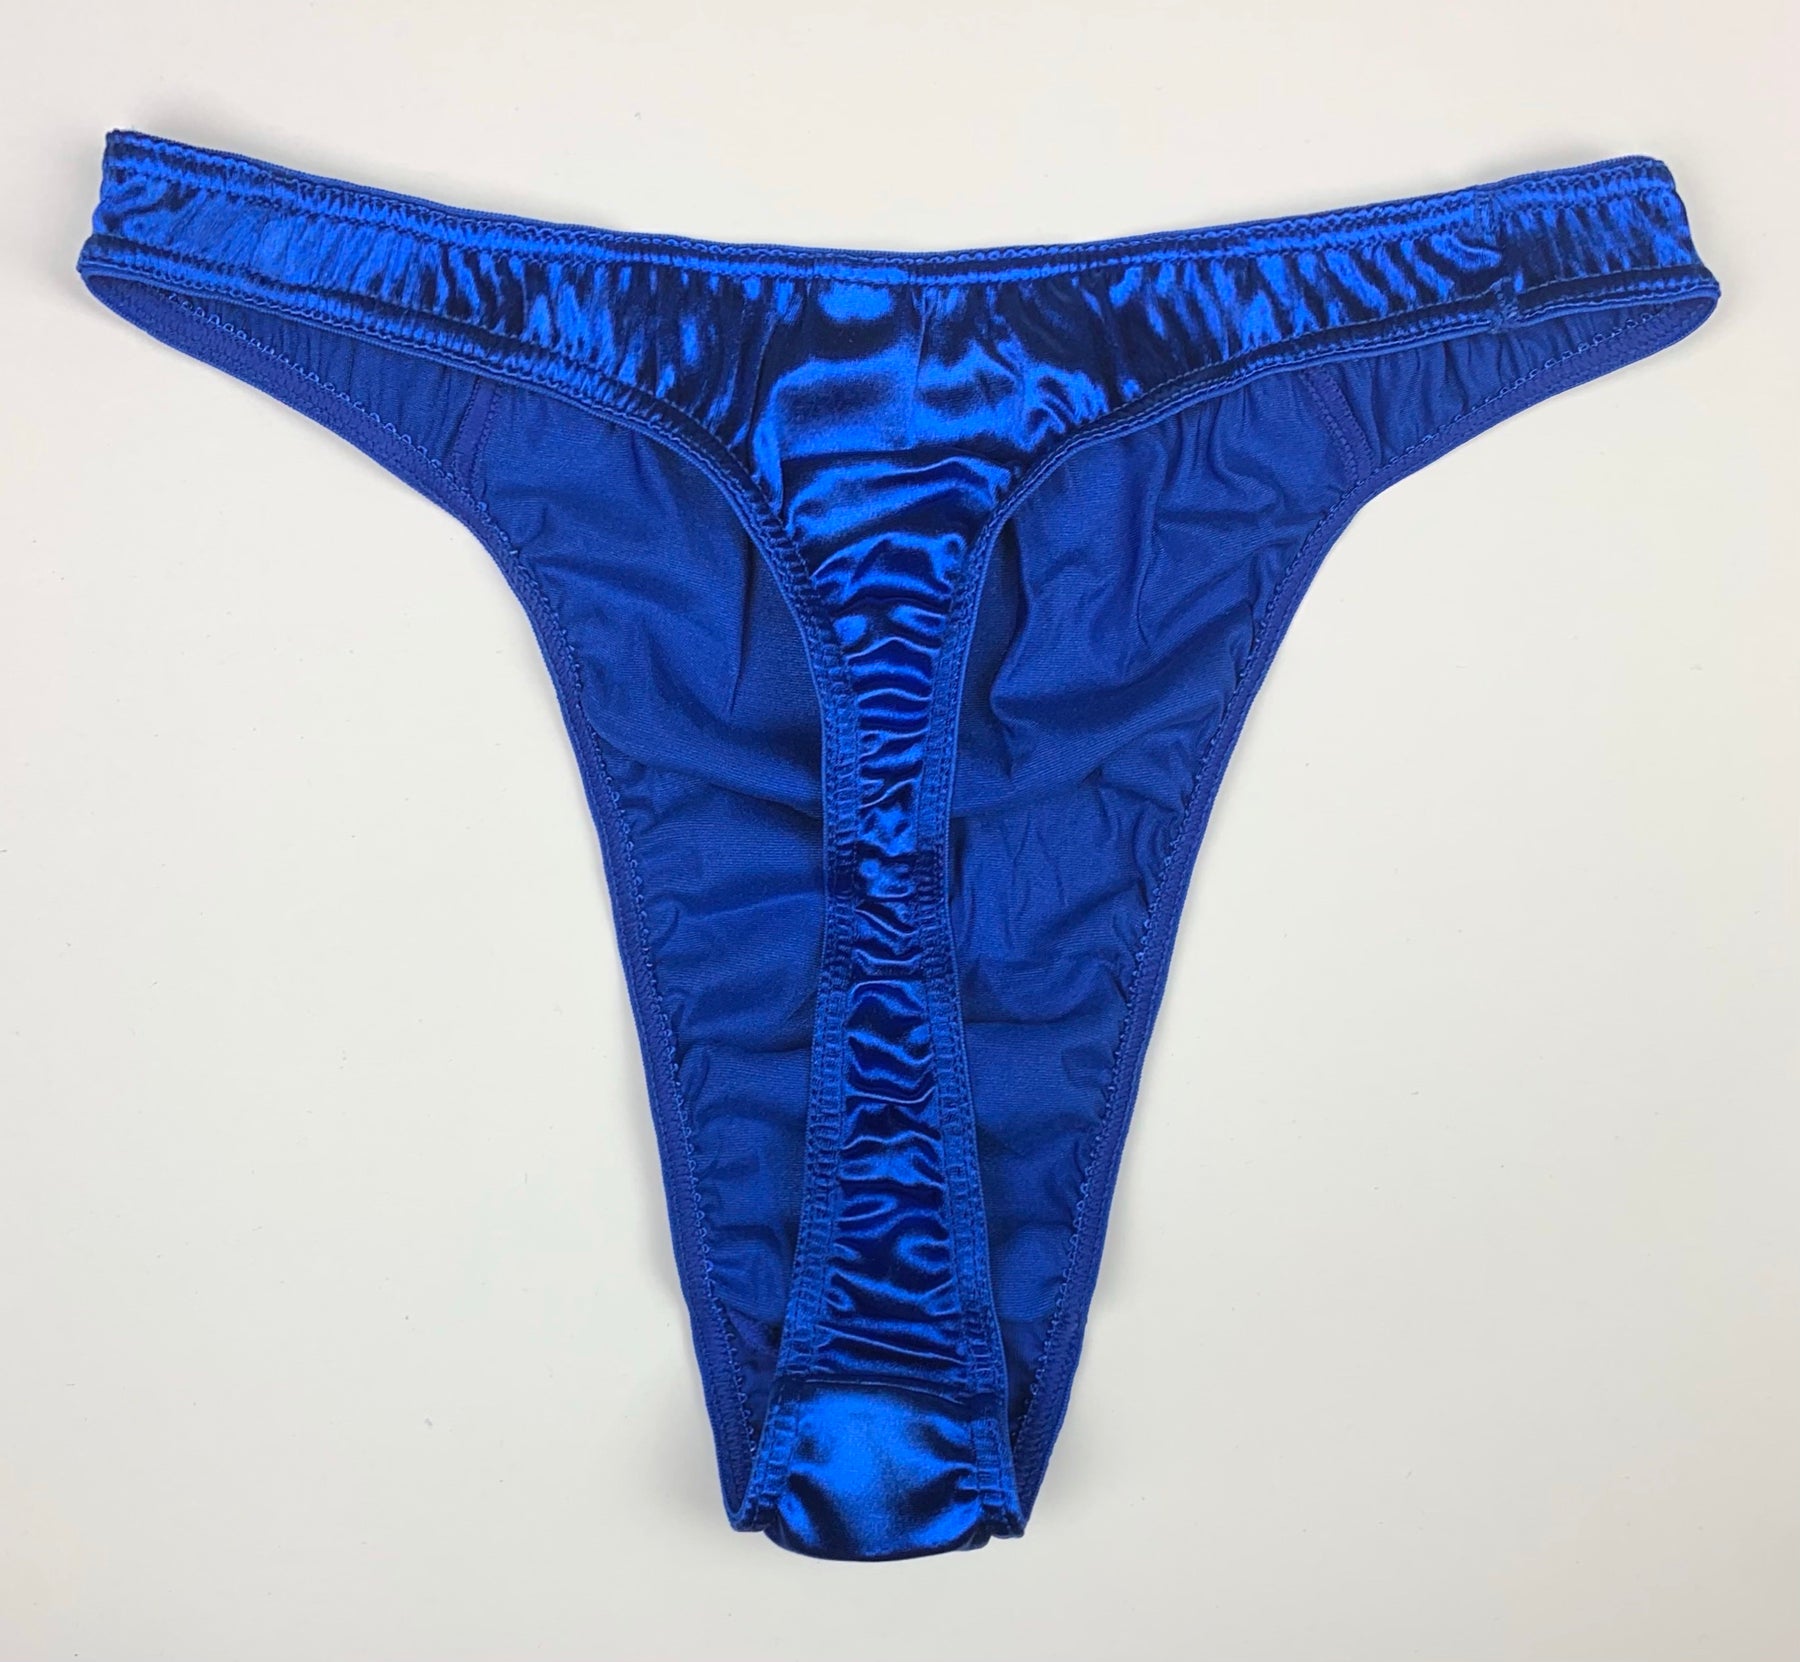 Big Girl Panties - blu/blk Classic Thong